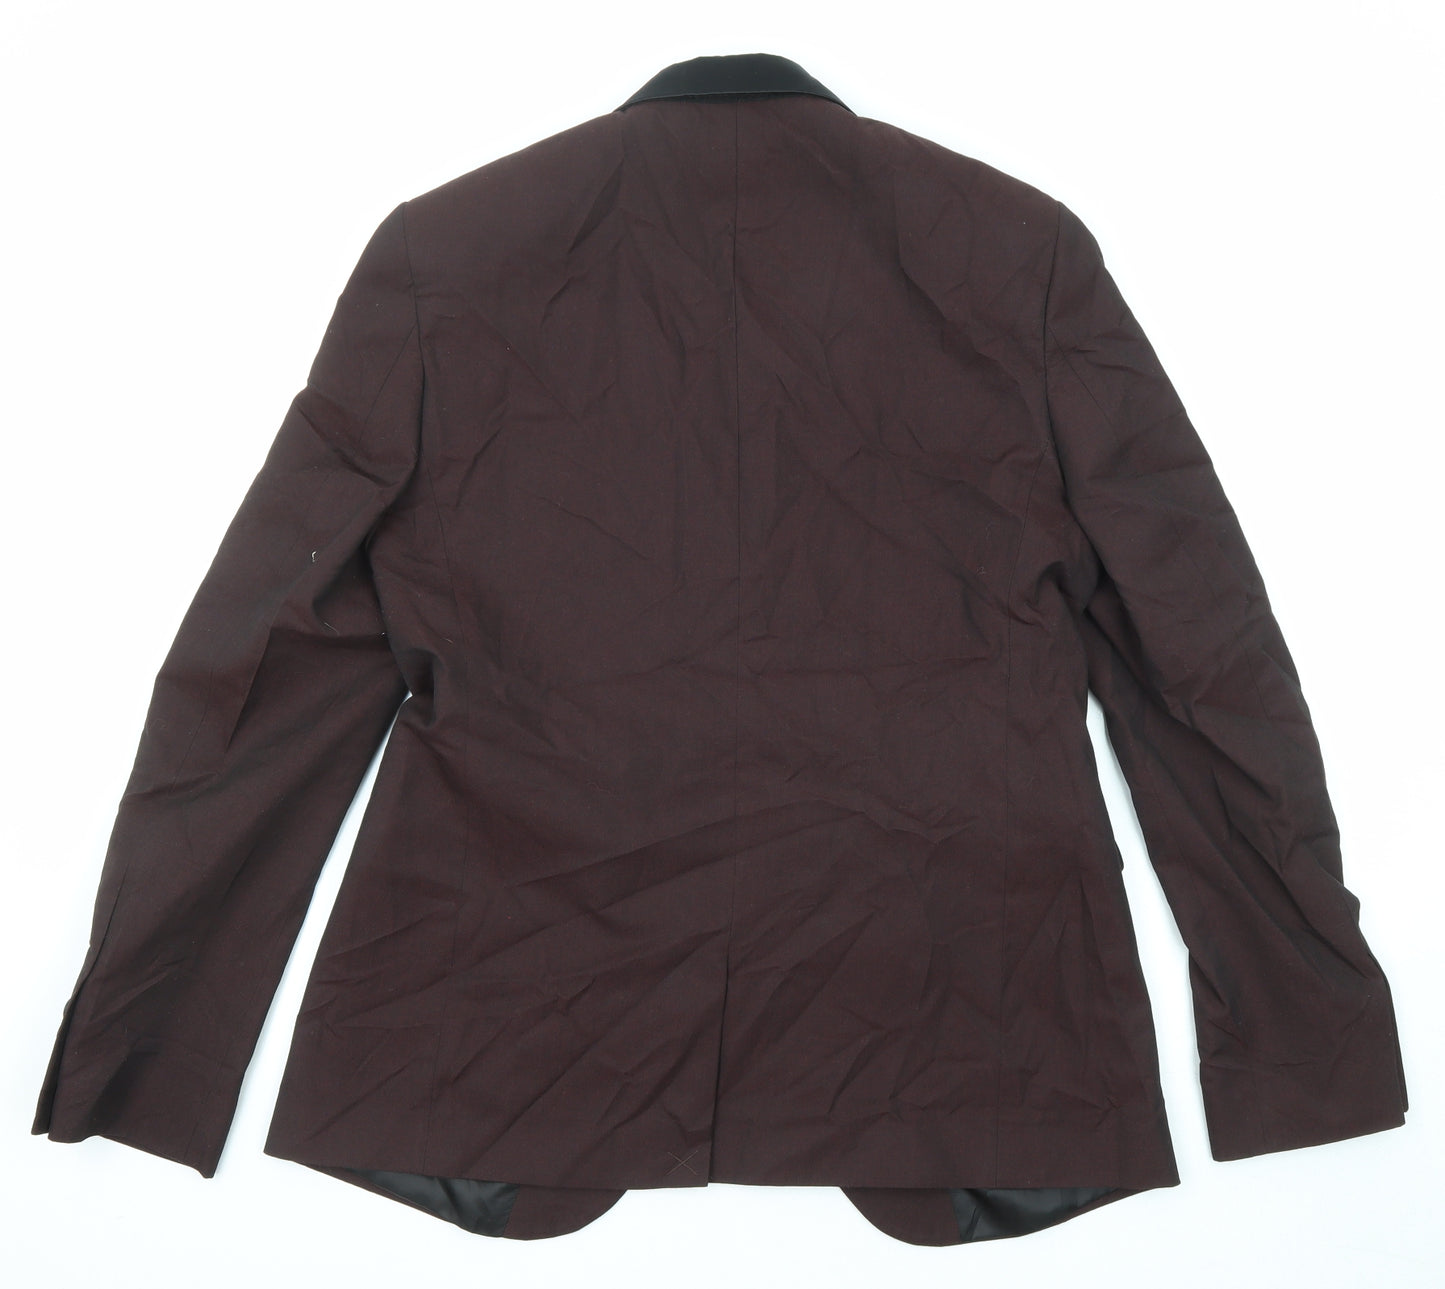 ASOS Mens Purple Polyester Jacket Suit Jacket Size 40 Regular